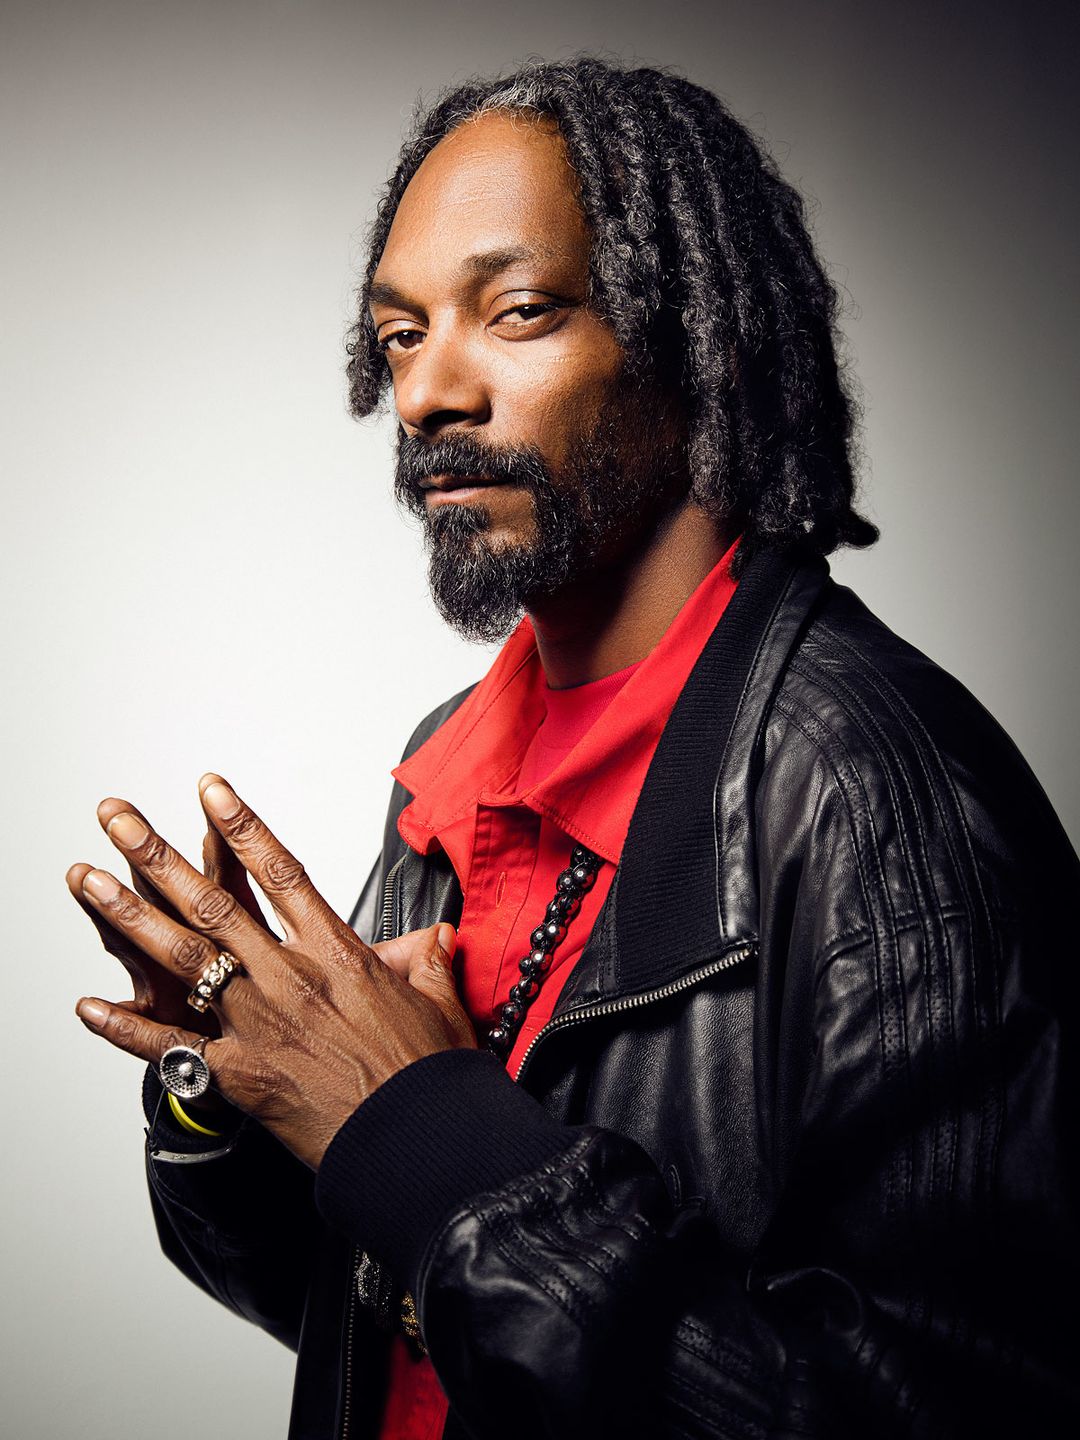 Snoop Dogg main achievements